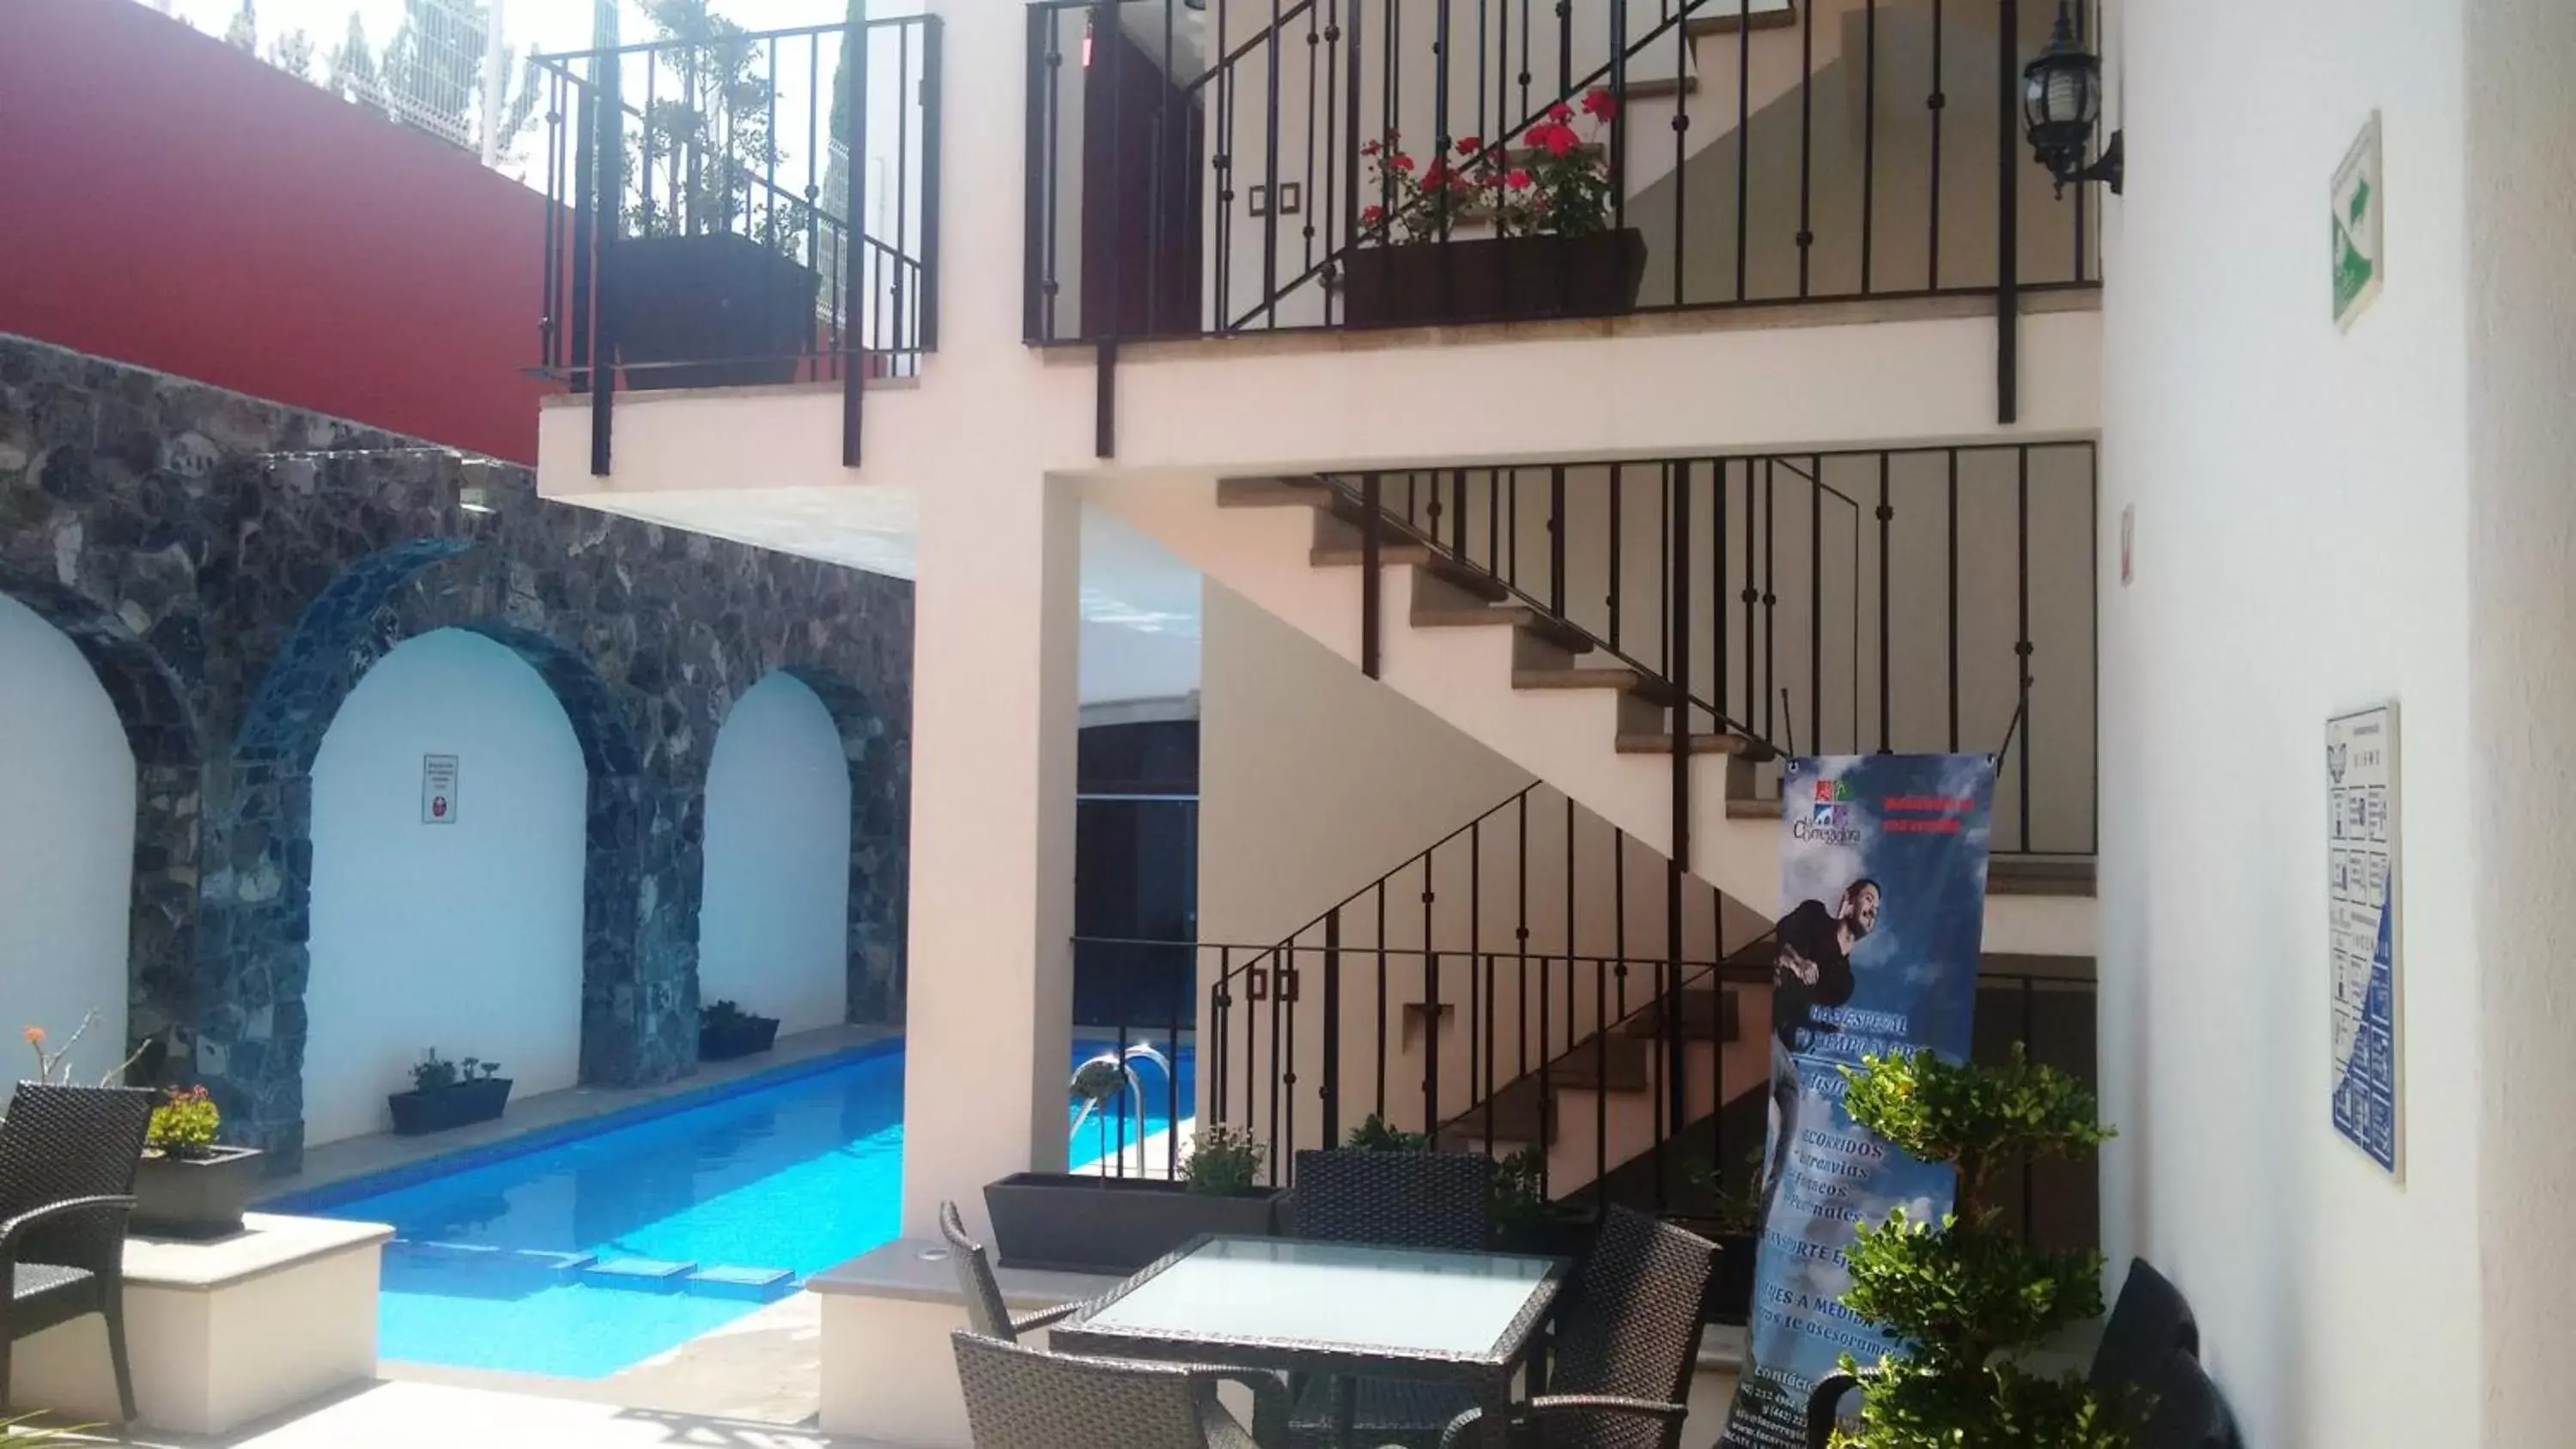 Swimming Pool in Hotel San Xavier